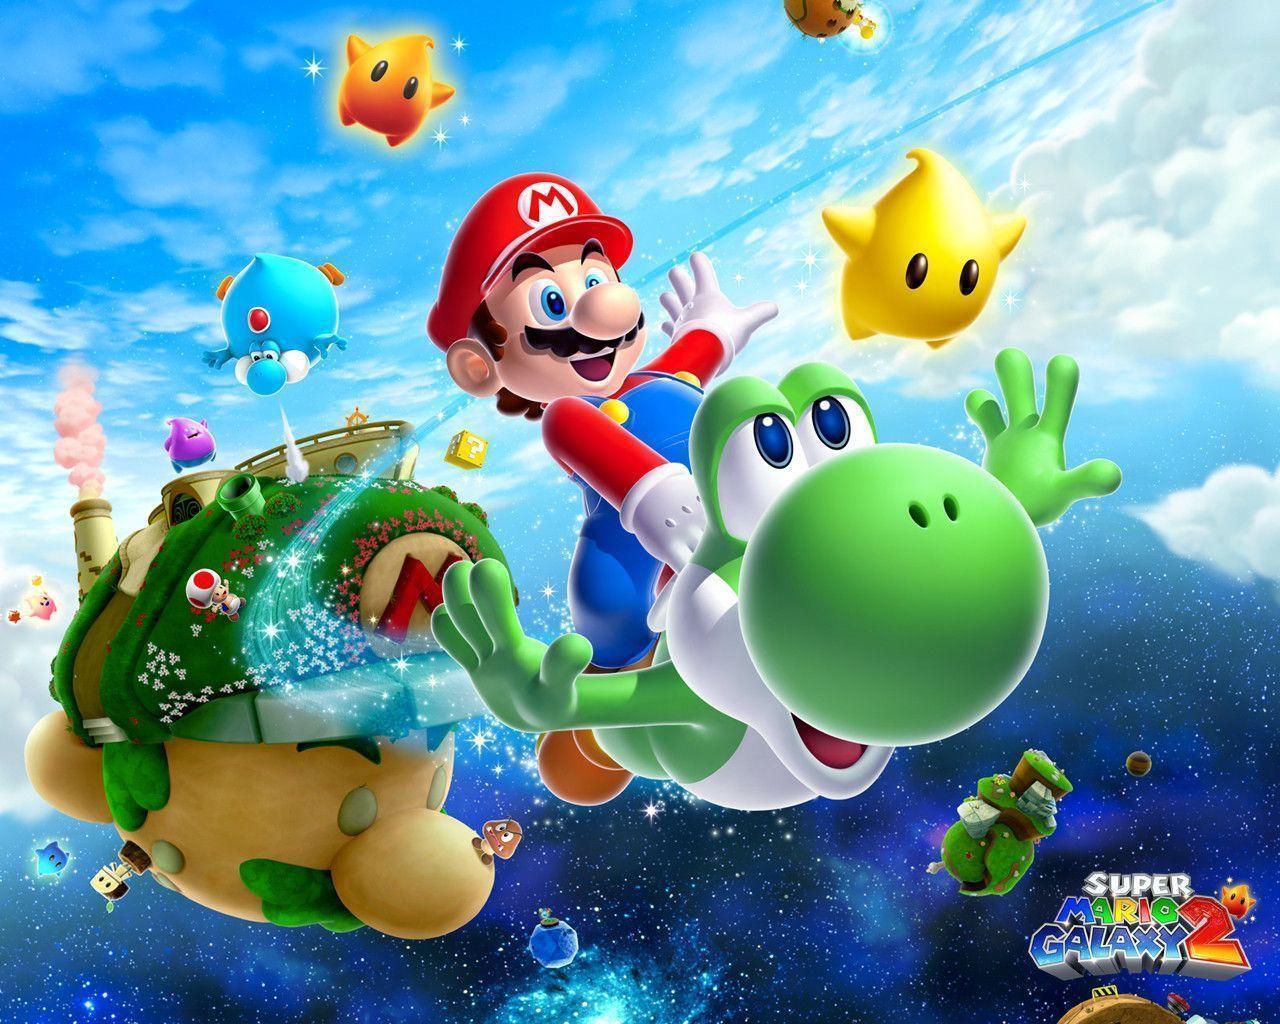 Mario Yoshi Games Wallpaper Image featuring Super Mario